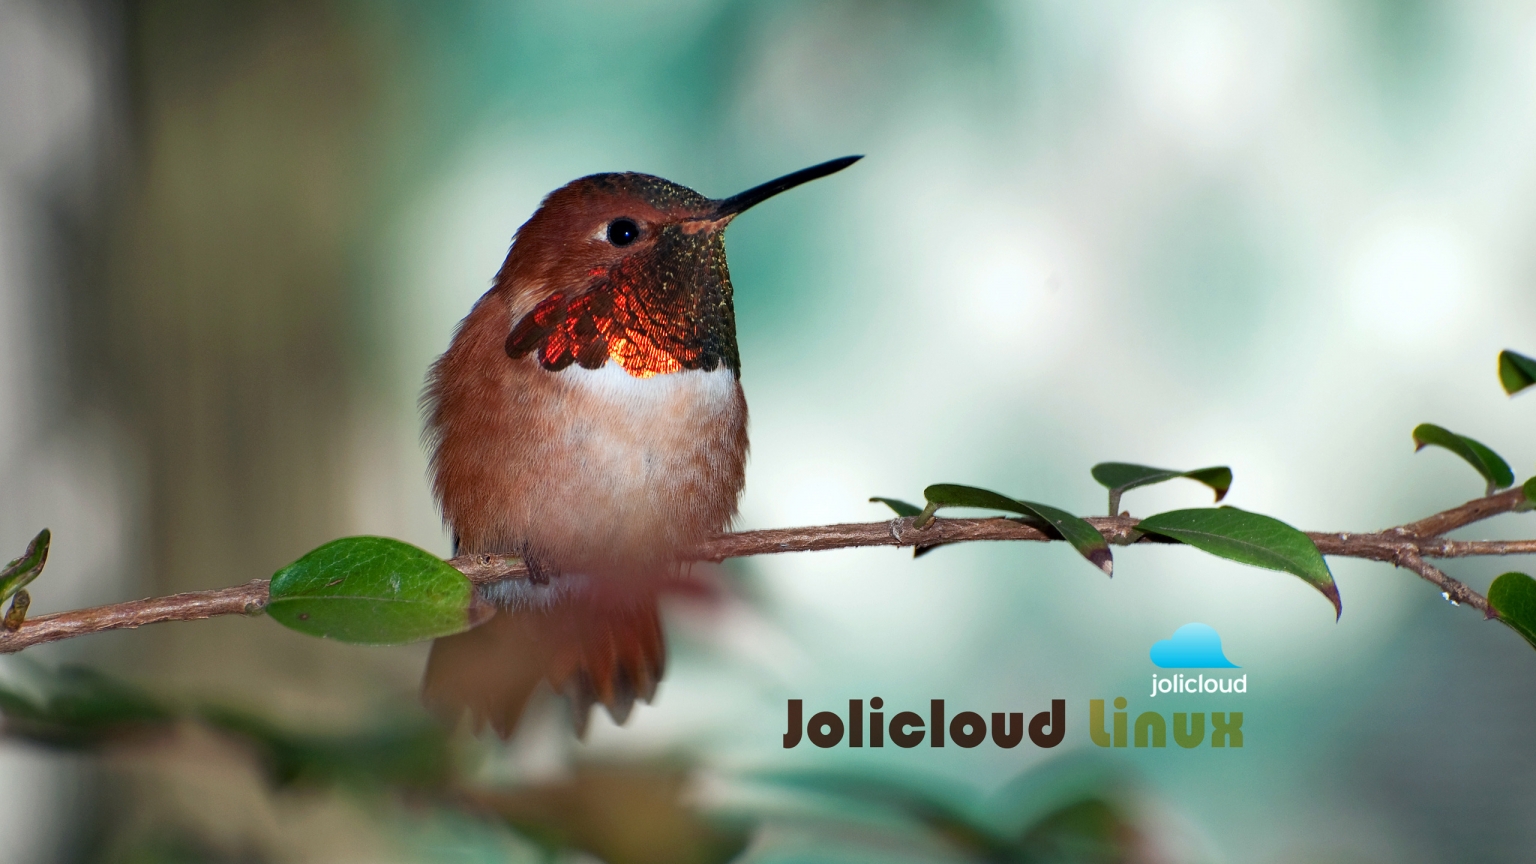 Jolicloud Linux Hummingbird for 1536 x 864 HDTV resolution